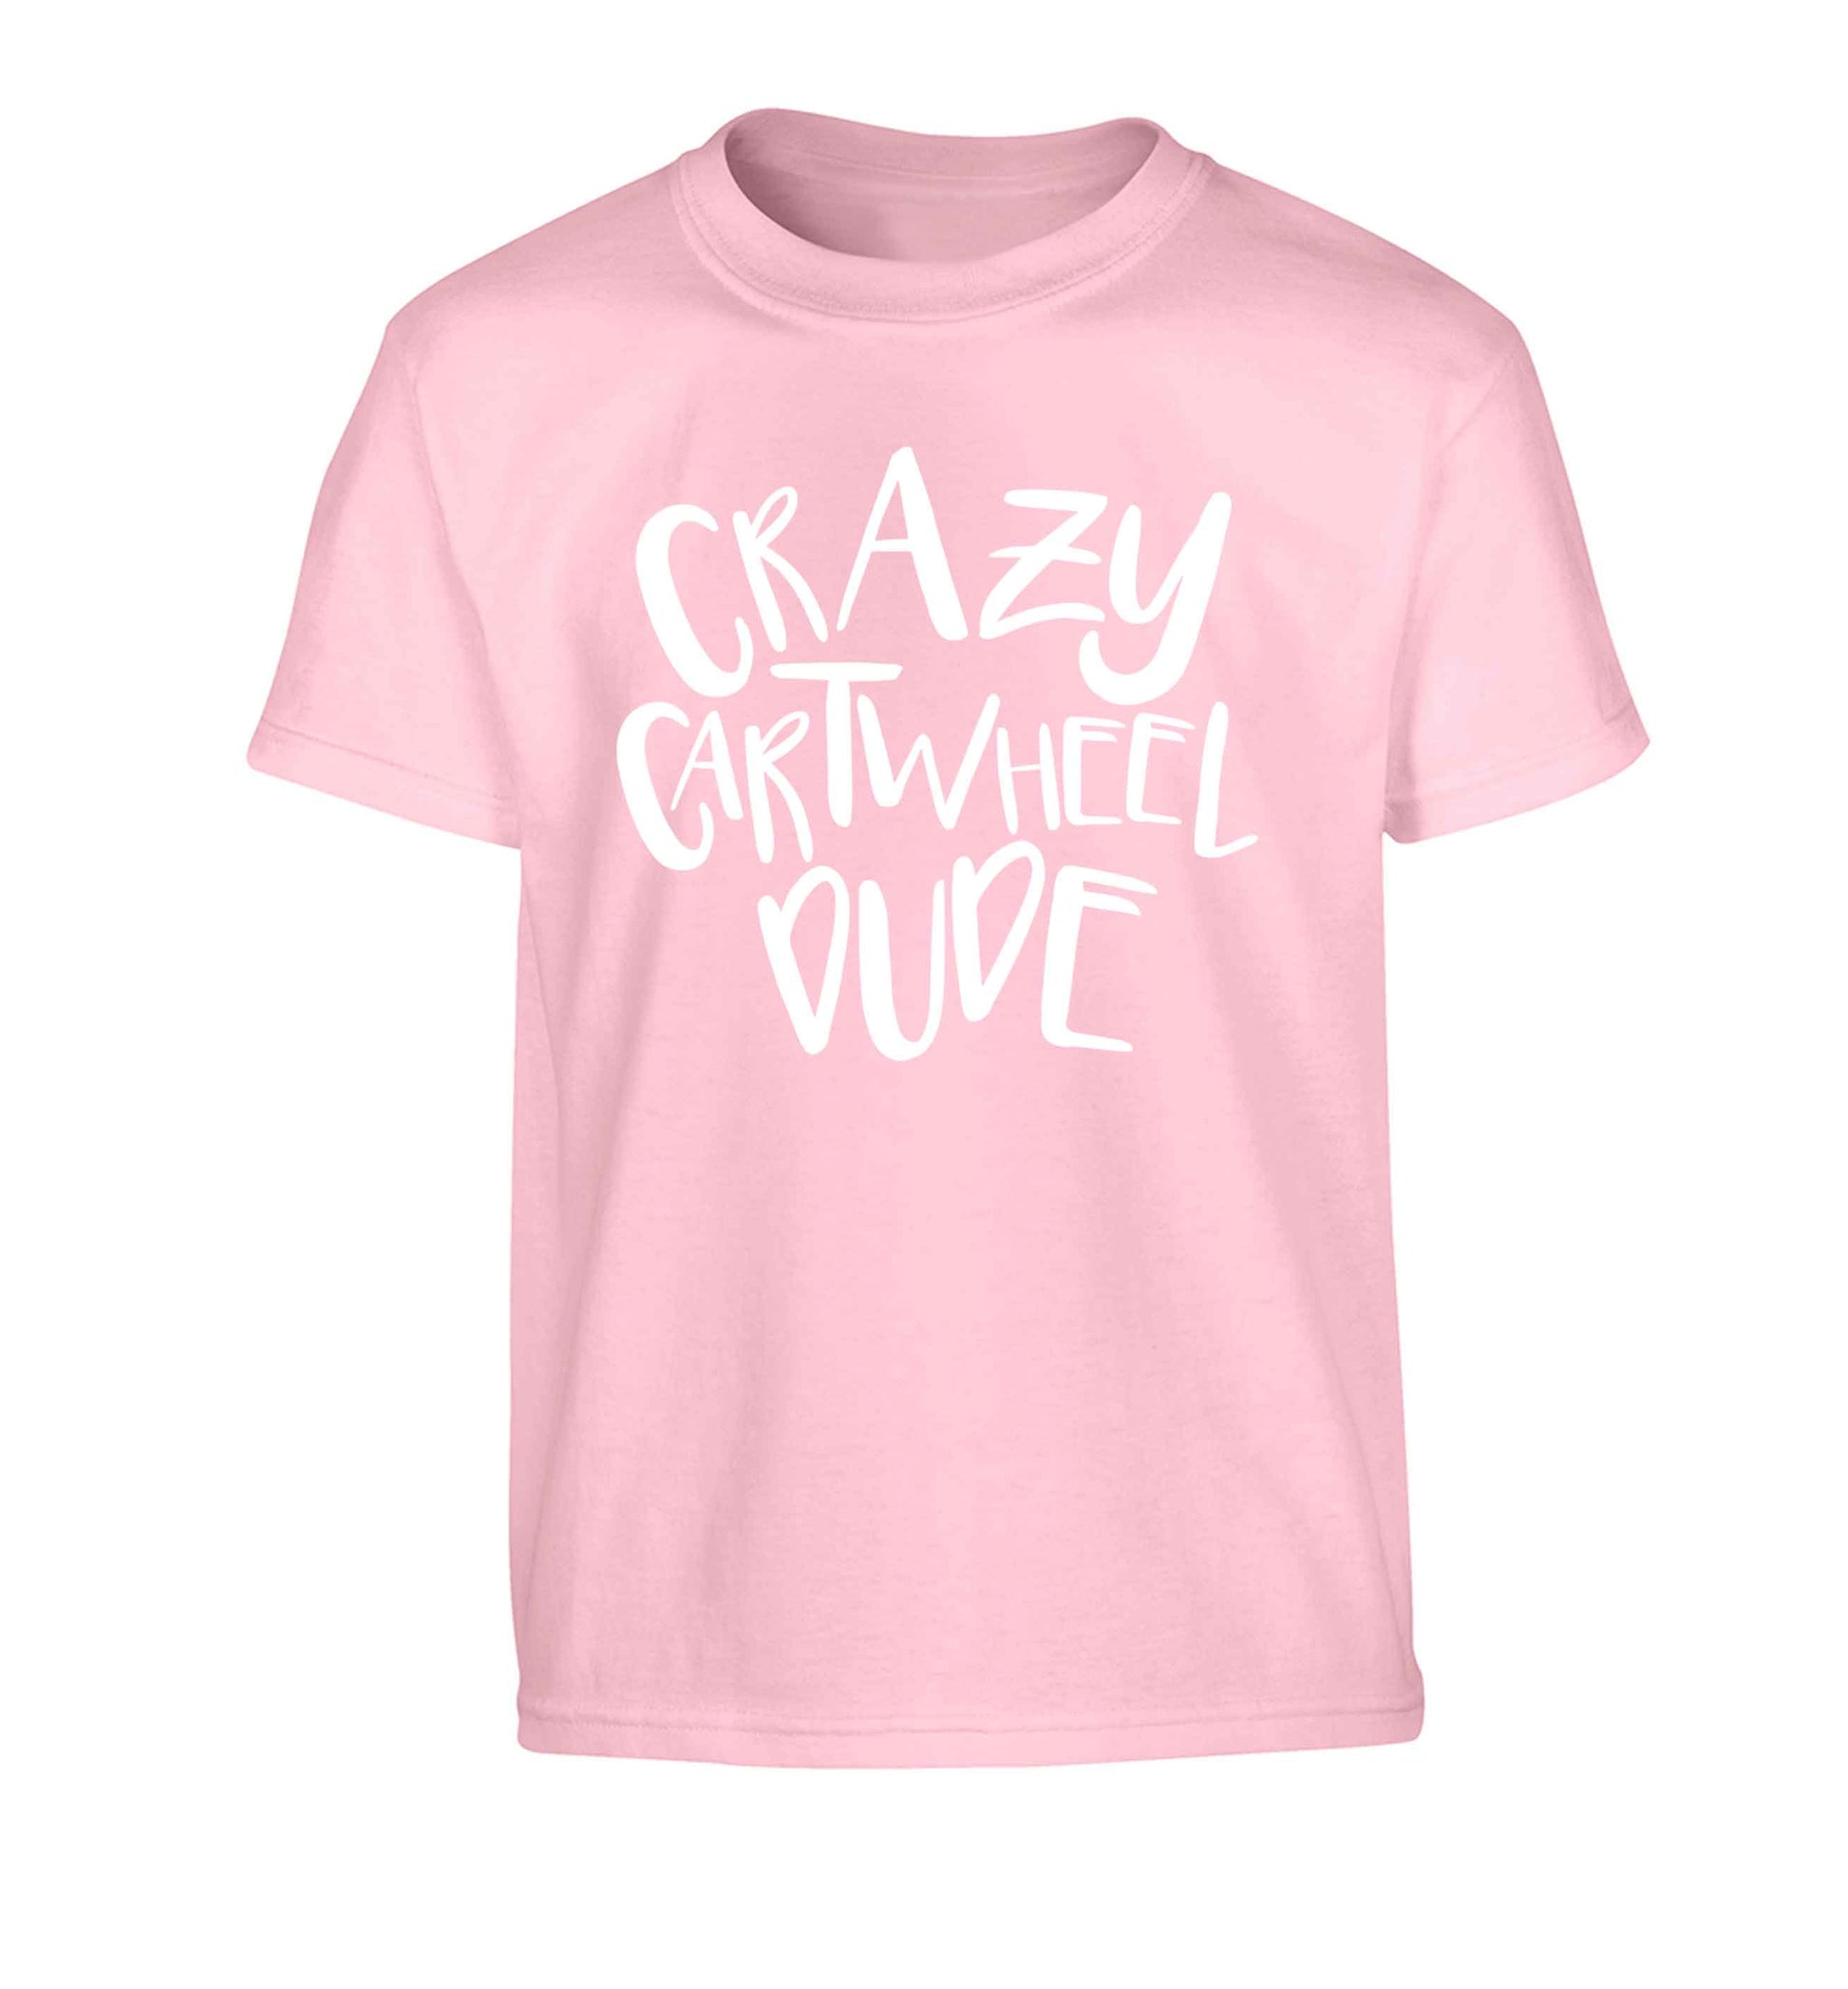 Crazy cartwheel dude Children's light pink Tshirt 12-13 Years